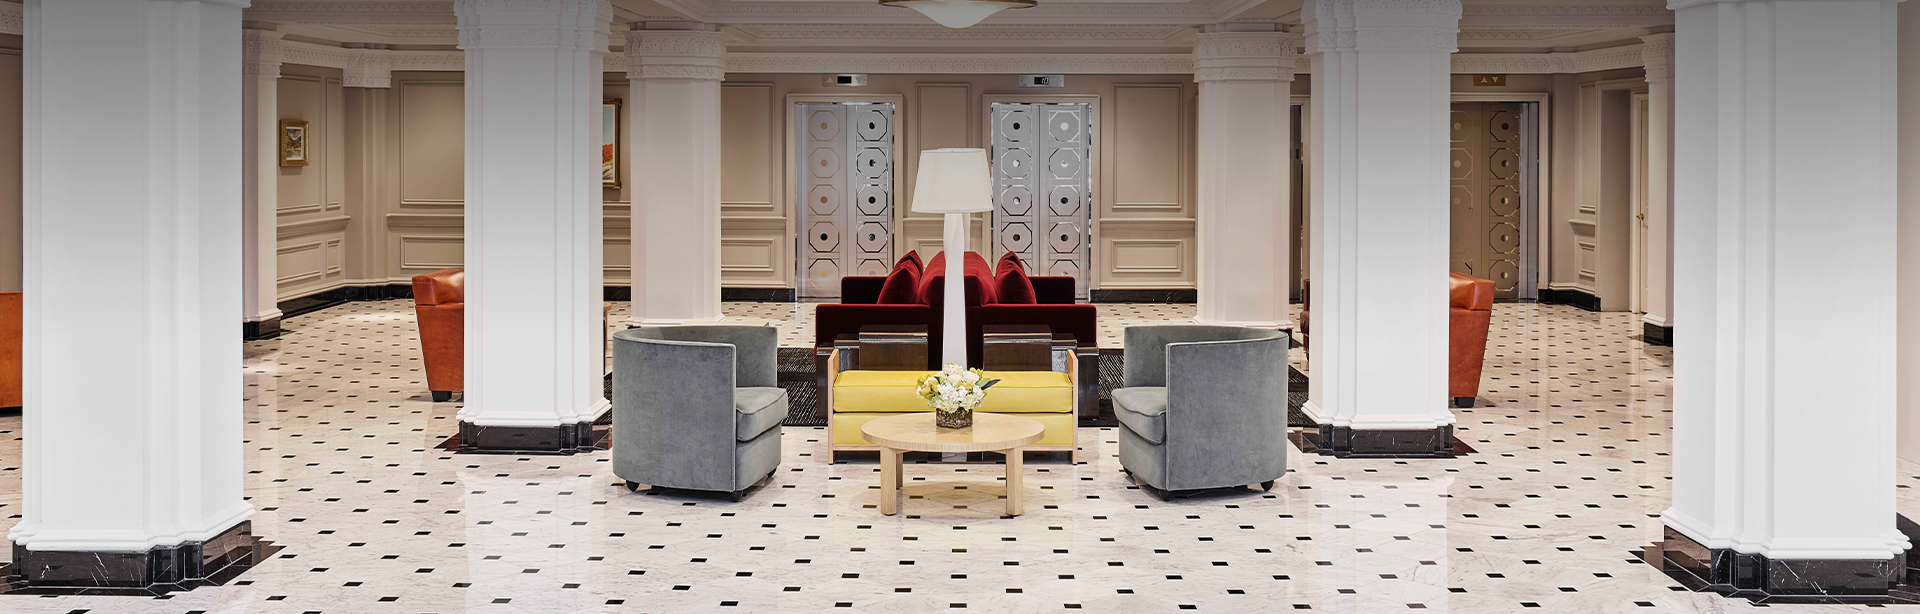 hamilton hotel lobby with elegant furniture